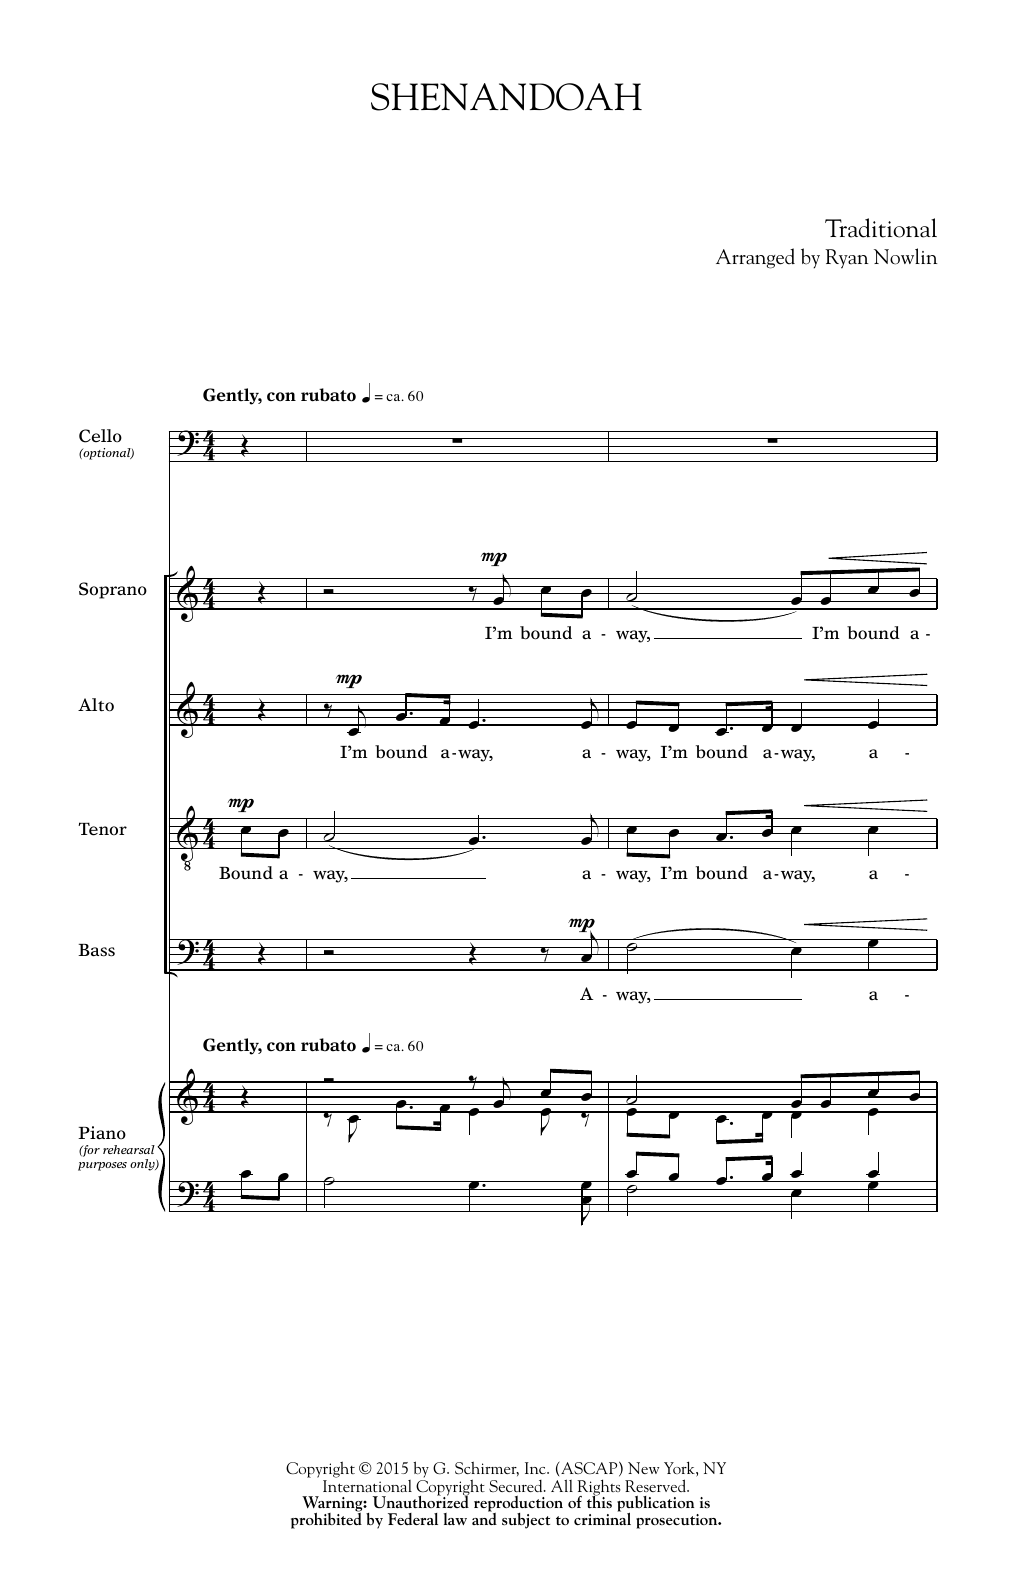 Ryan Nowlin Shenandoah Sheet Music Notes & Chords for Cello - Download or Print PDF